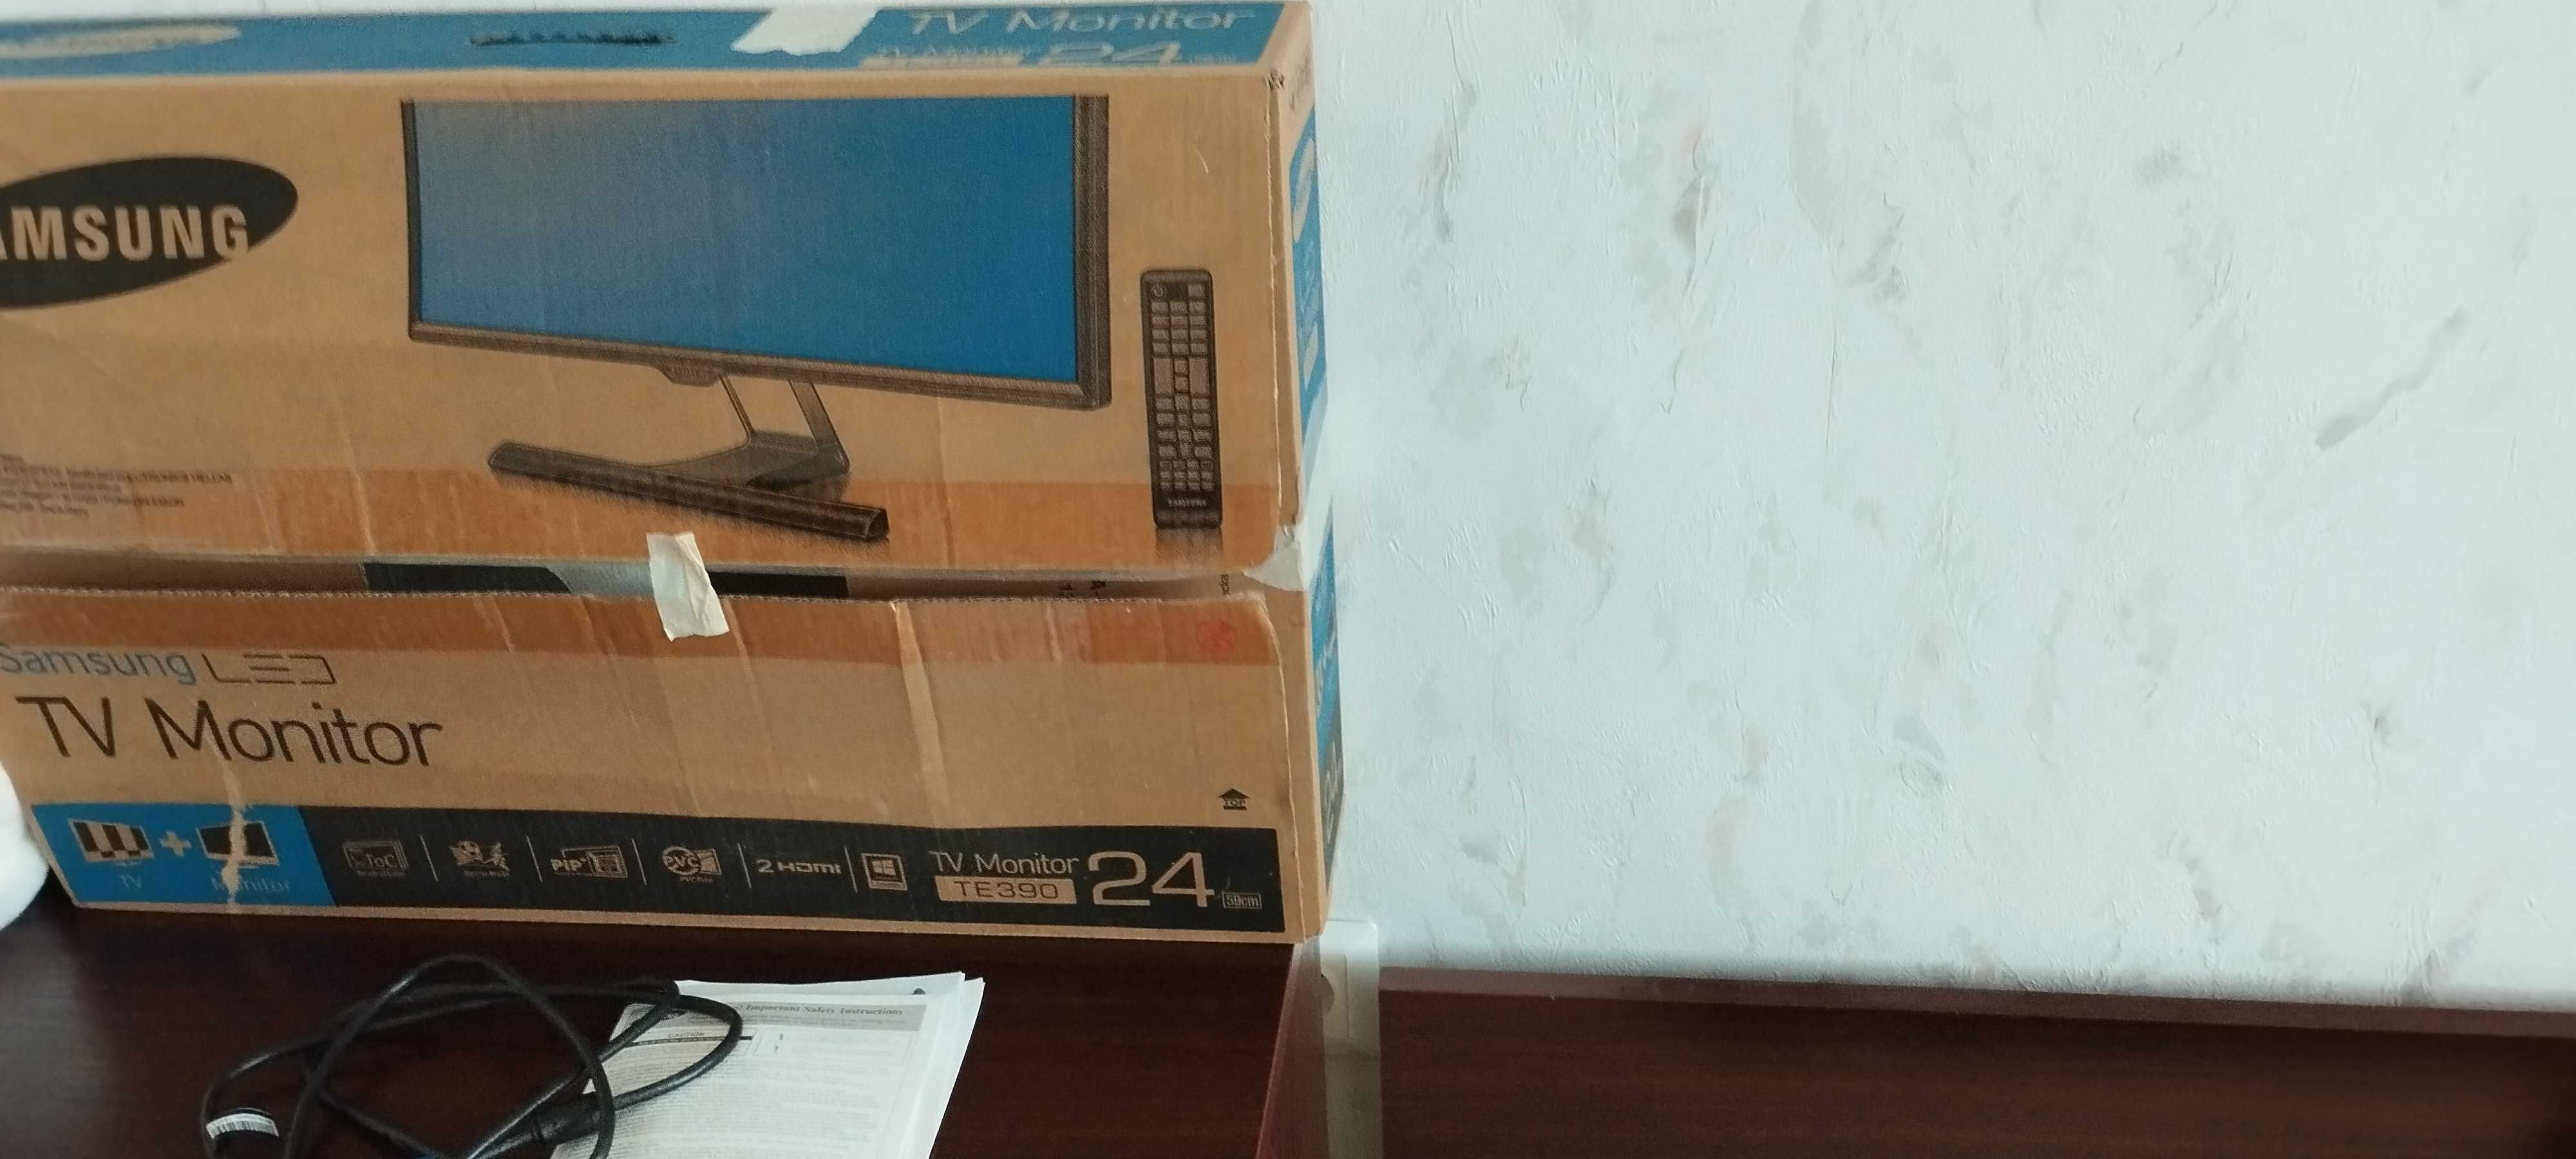 Телевизор/монитор Samsung 24 inch